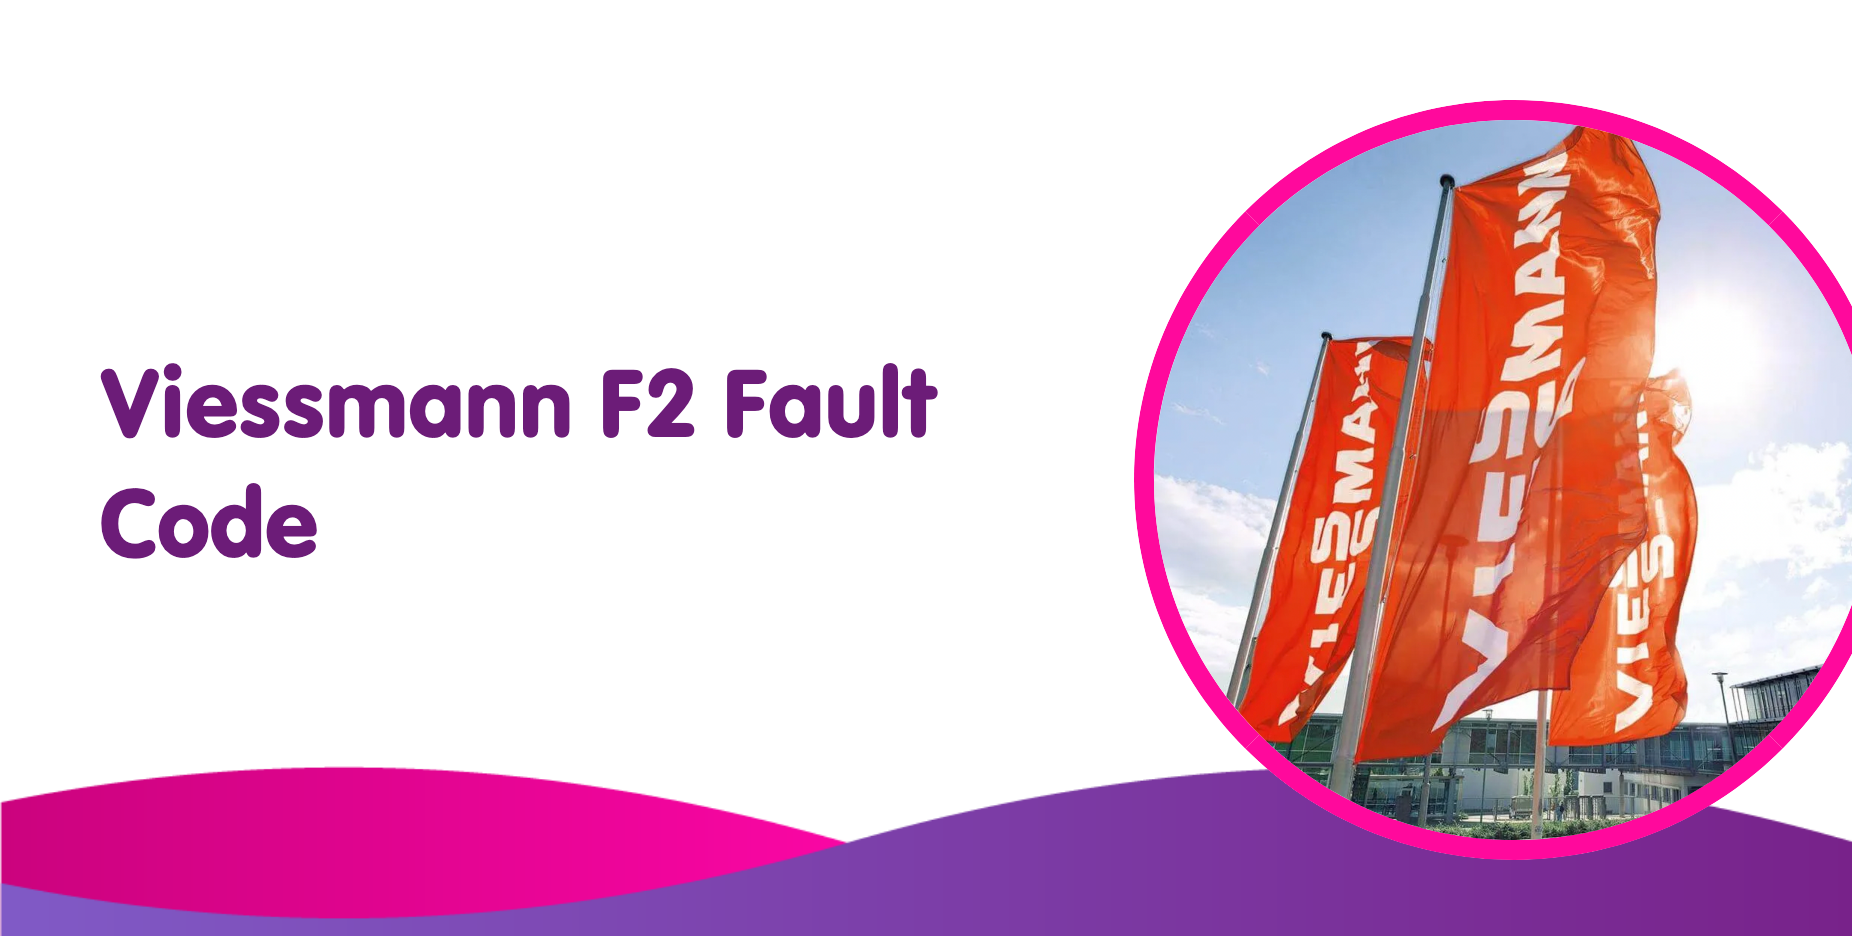 viessmann f2 fault code